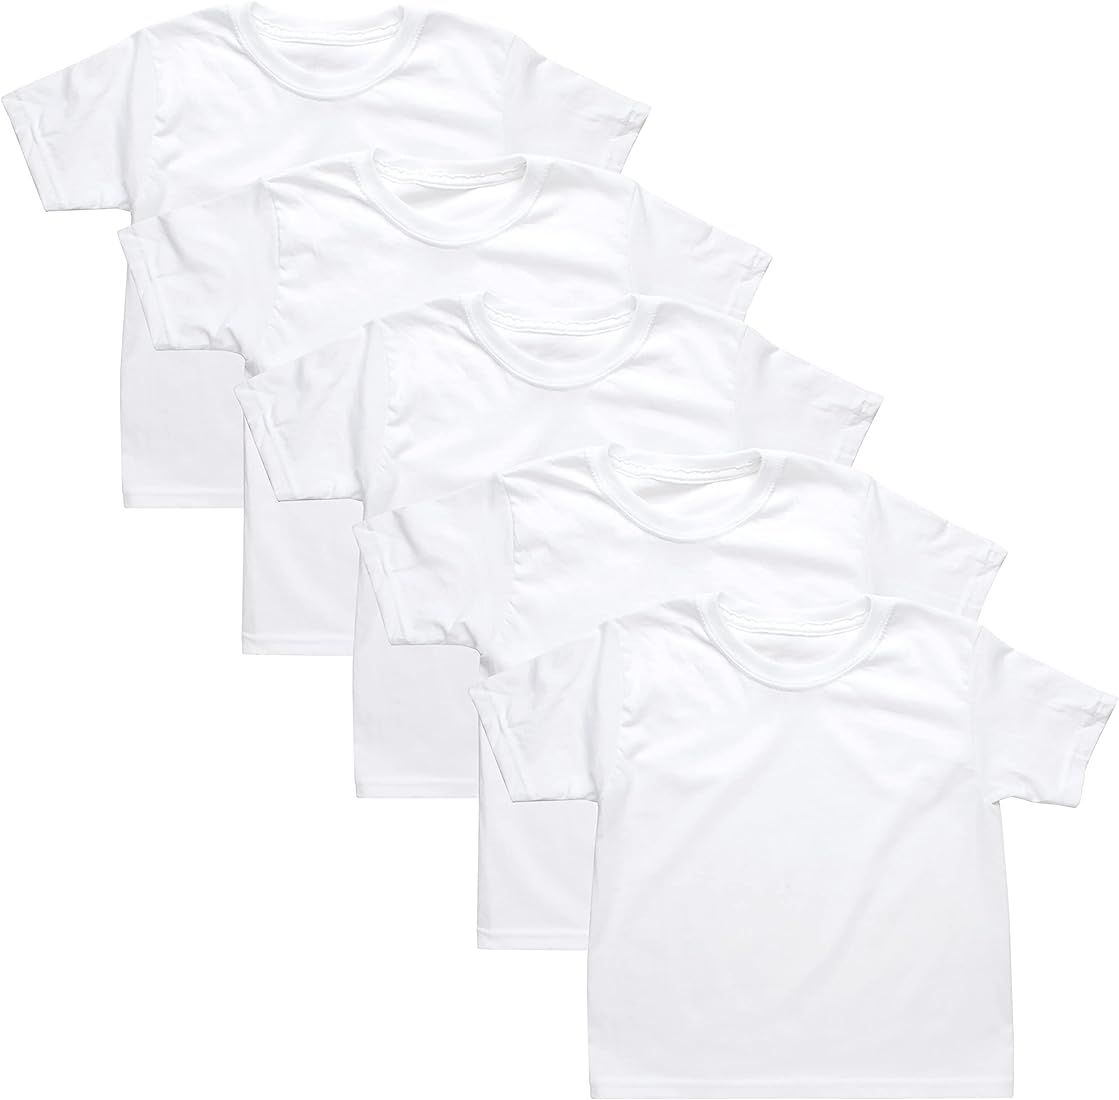 Hanes Toddler Boys' T-shirts, Toddler Boys' Undershirts, White T-Shirts for Babies, Toddler Boys'... | Amazon (US)